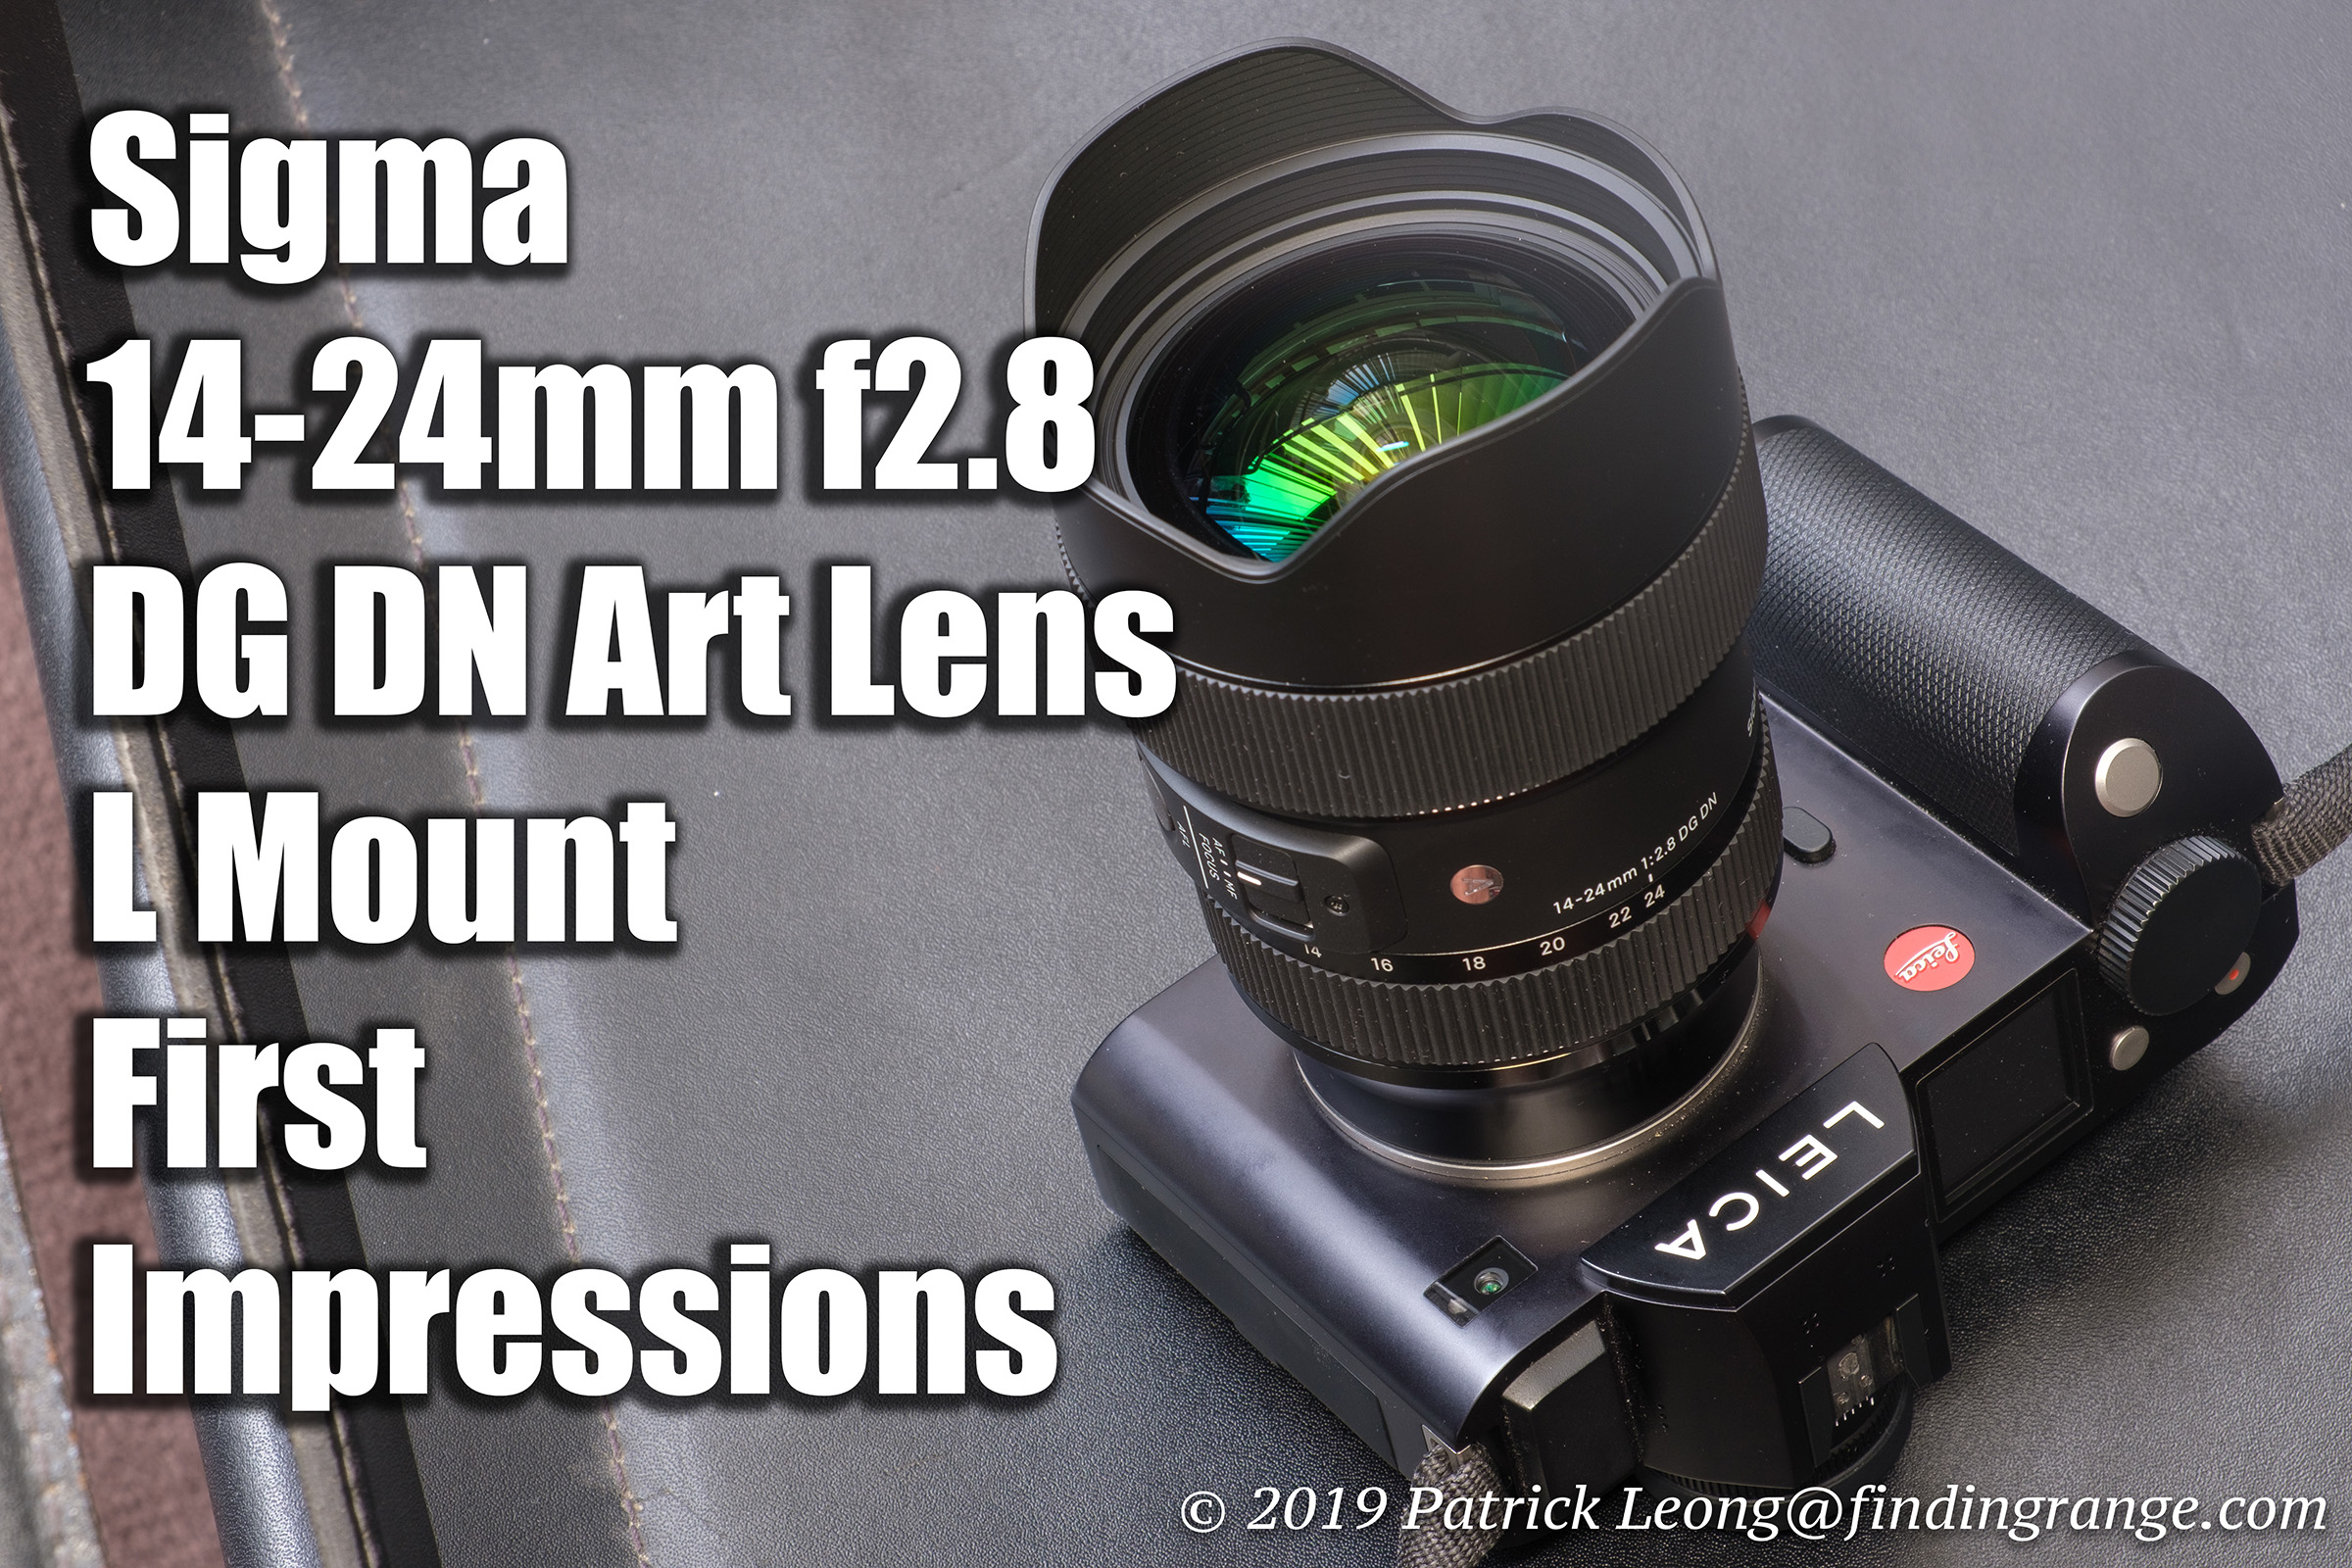 Sigma 14-24mm f2.8 DG DN Art Lens L Mount First Impressions